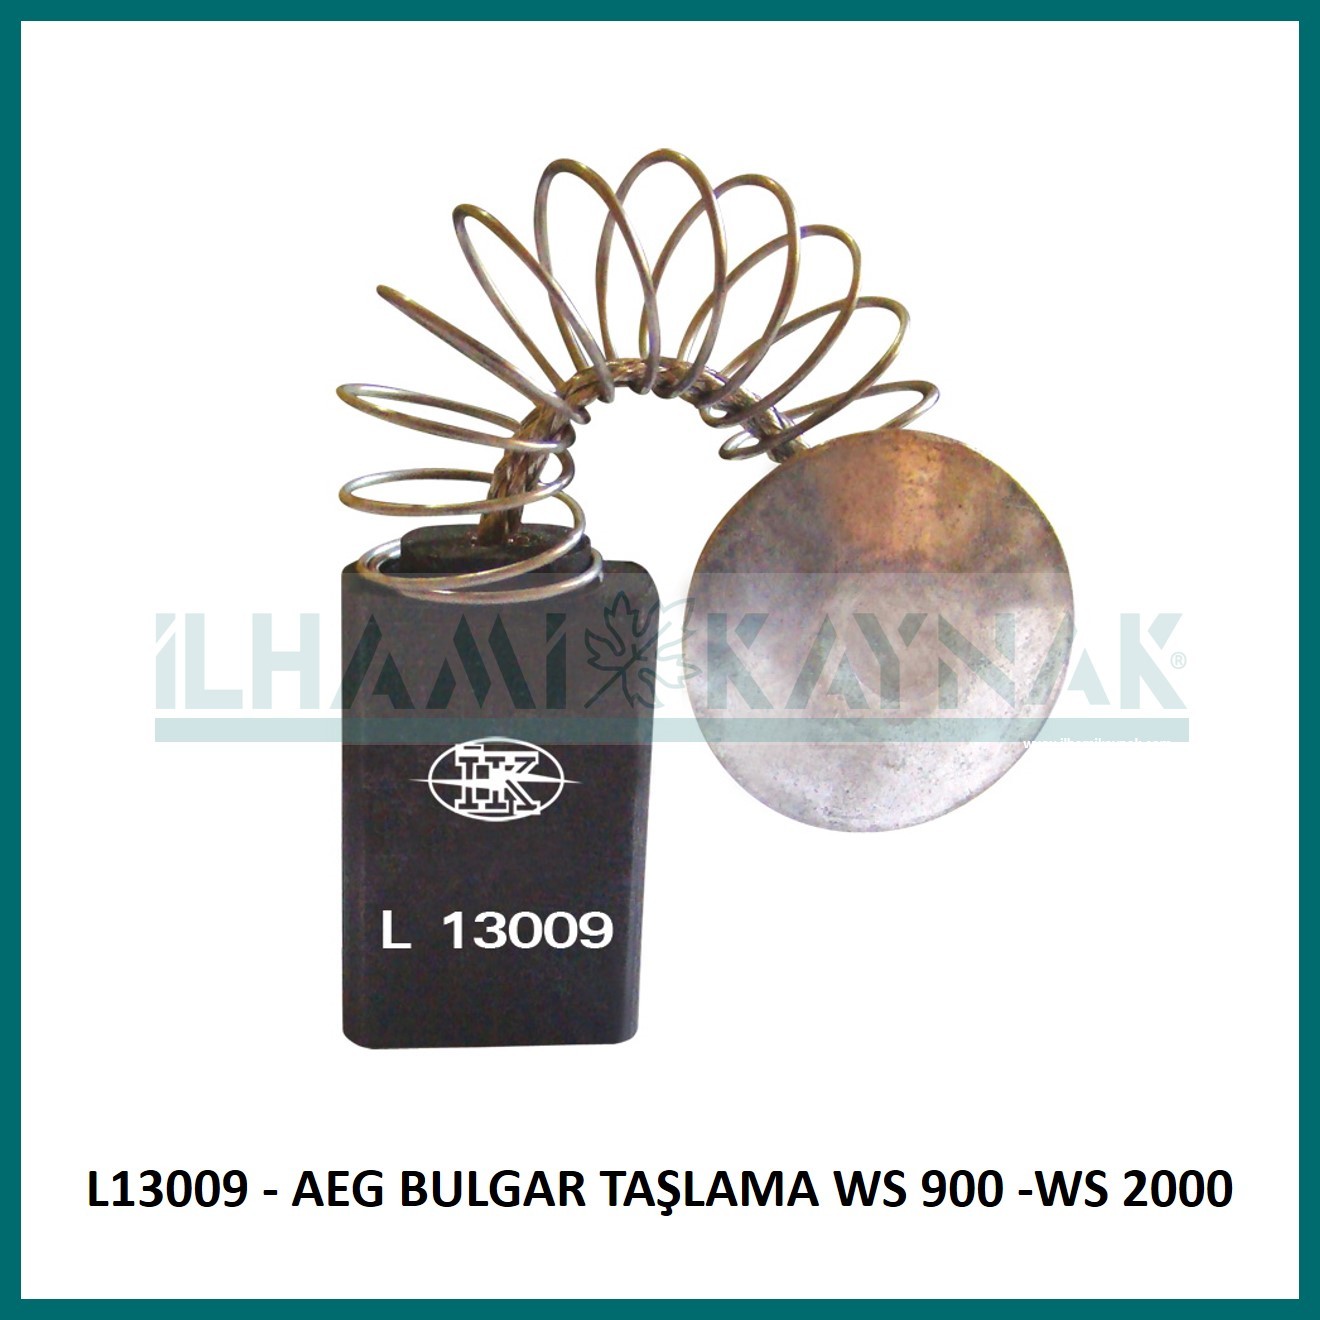 L13009 - AEG BULGAR TAŞLAMA WS 900 -WS 2000 - 8*16*26 mm - 50 Adet